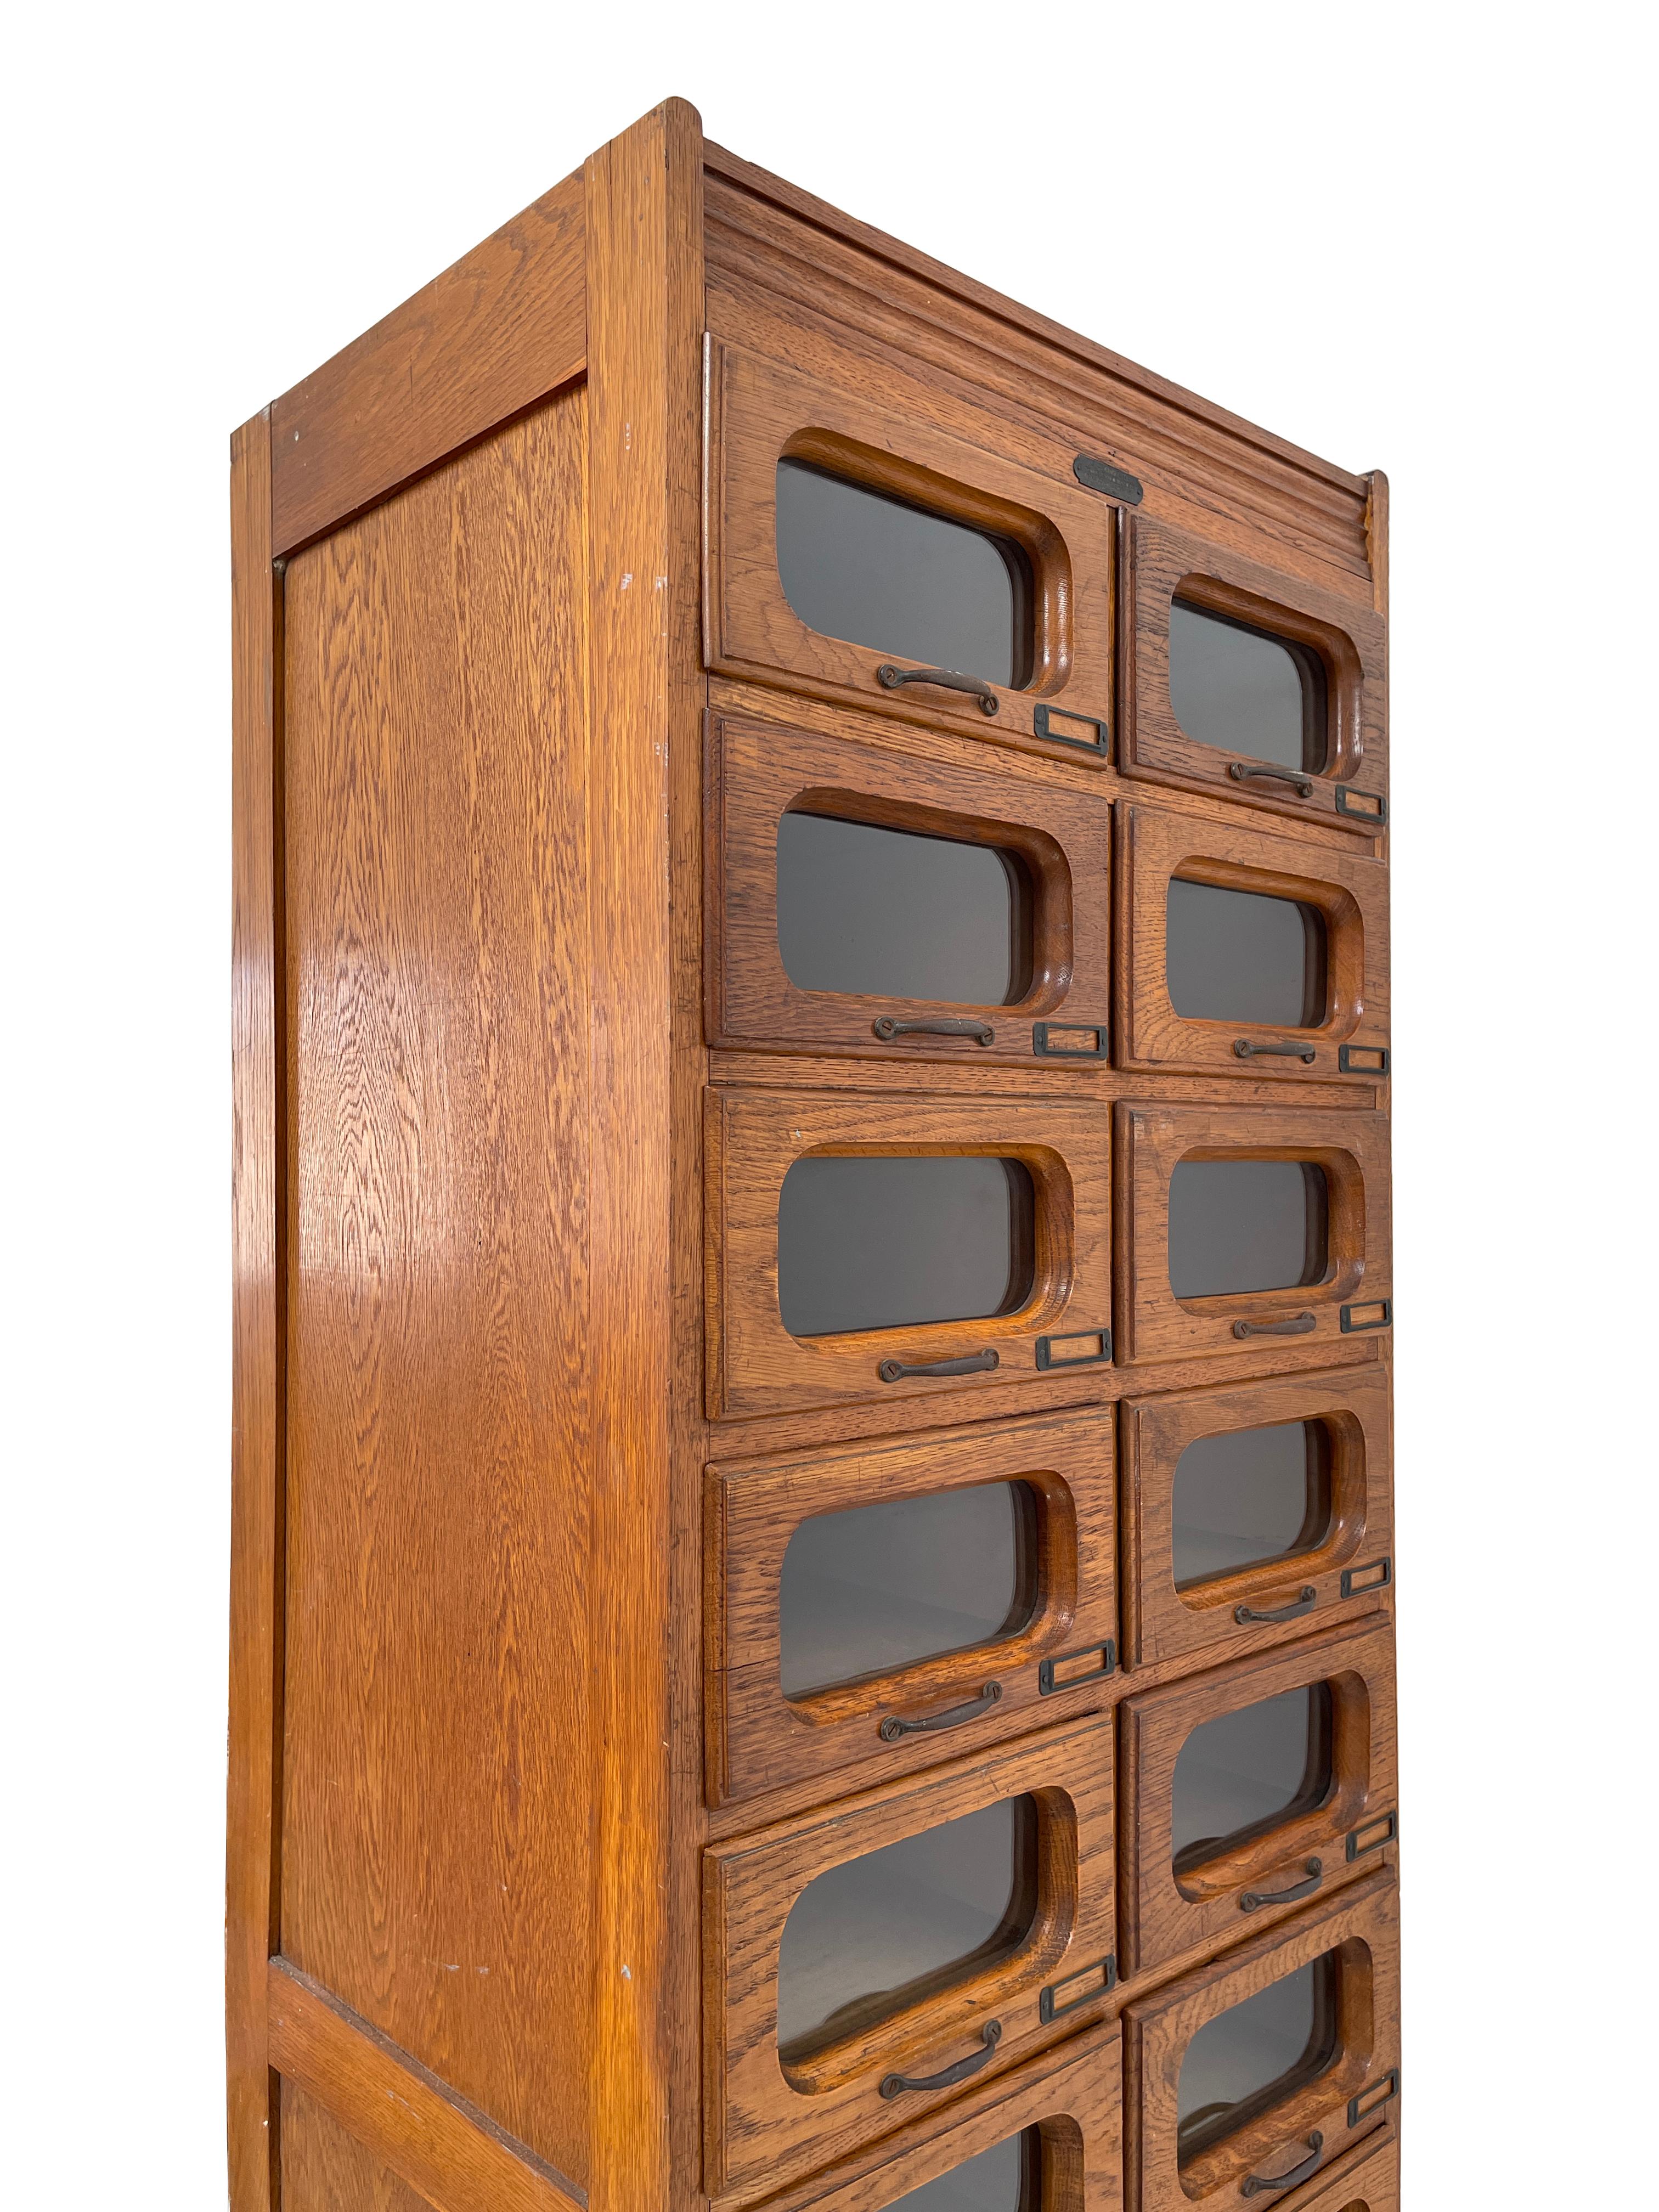 British Antique Industrial Vintage Haberdashery Shop Display Cabinet Chest of Drawers